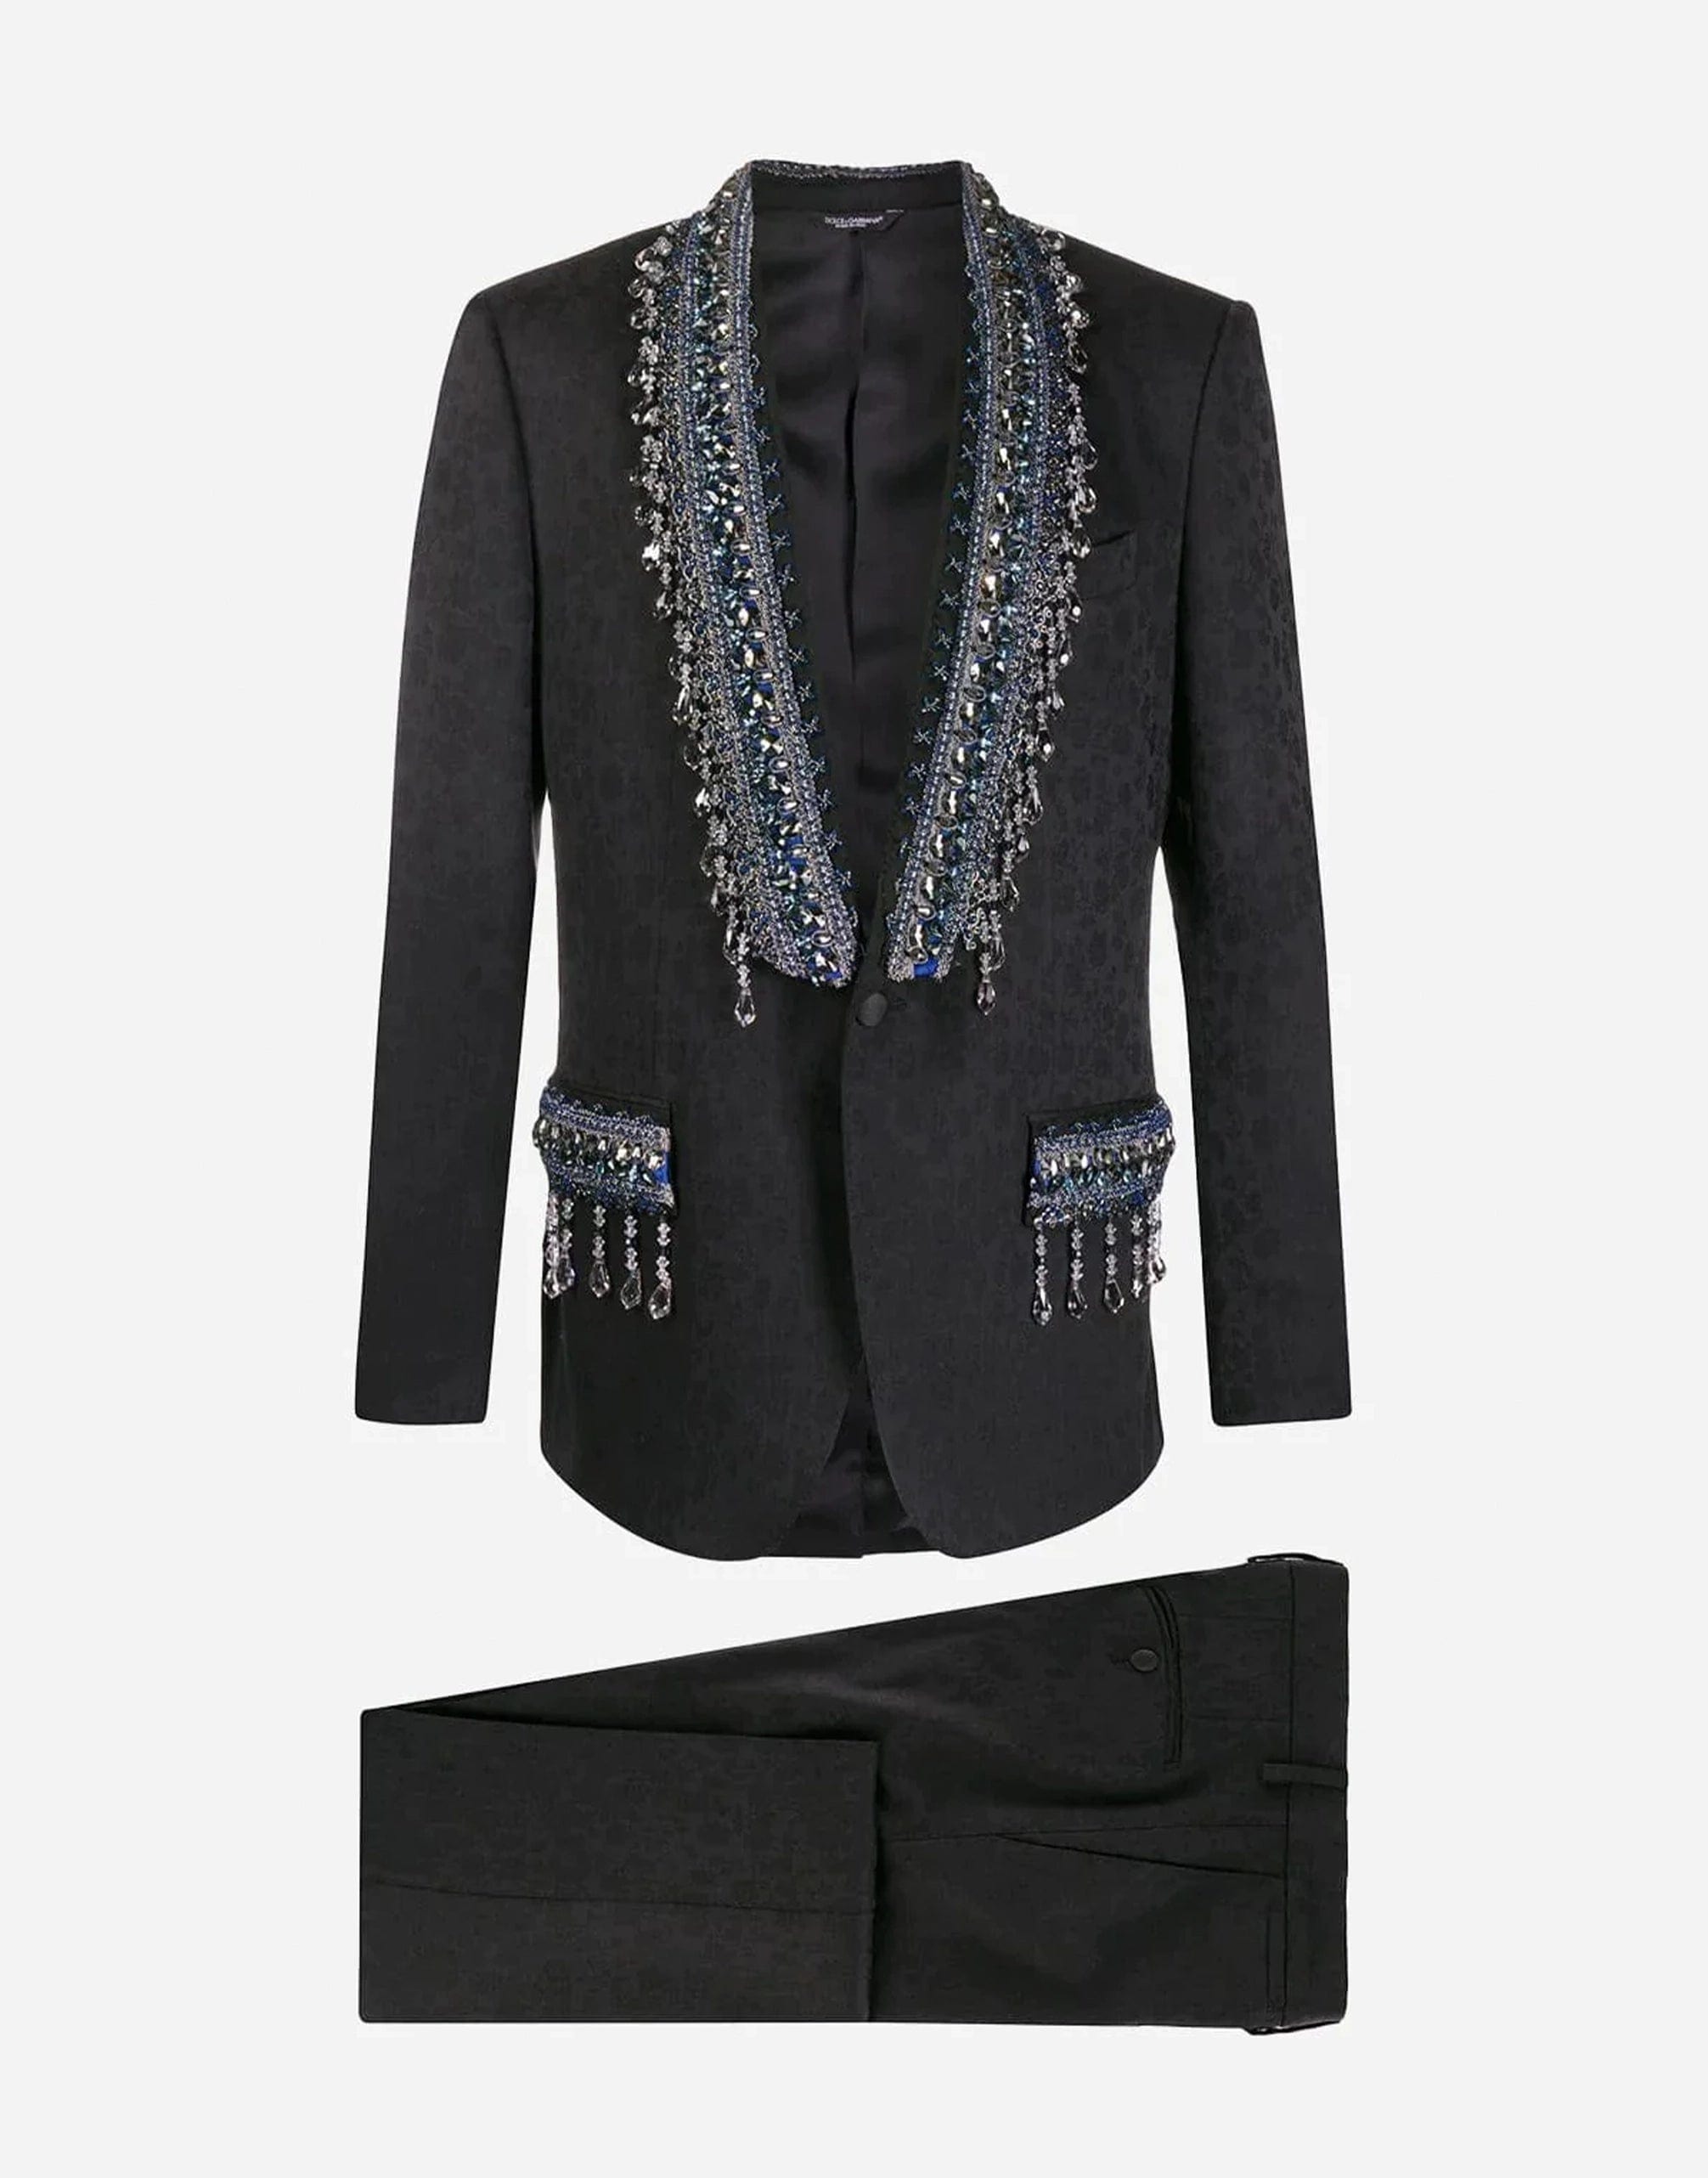 Dolce & Gabbana Martini-Fit Floral Jacquard Suit